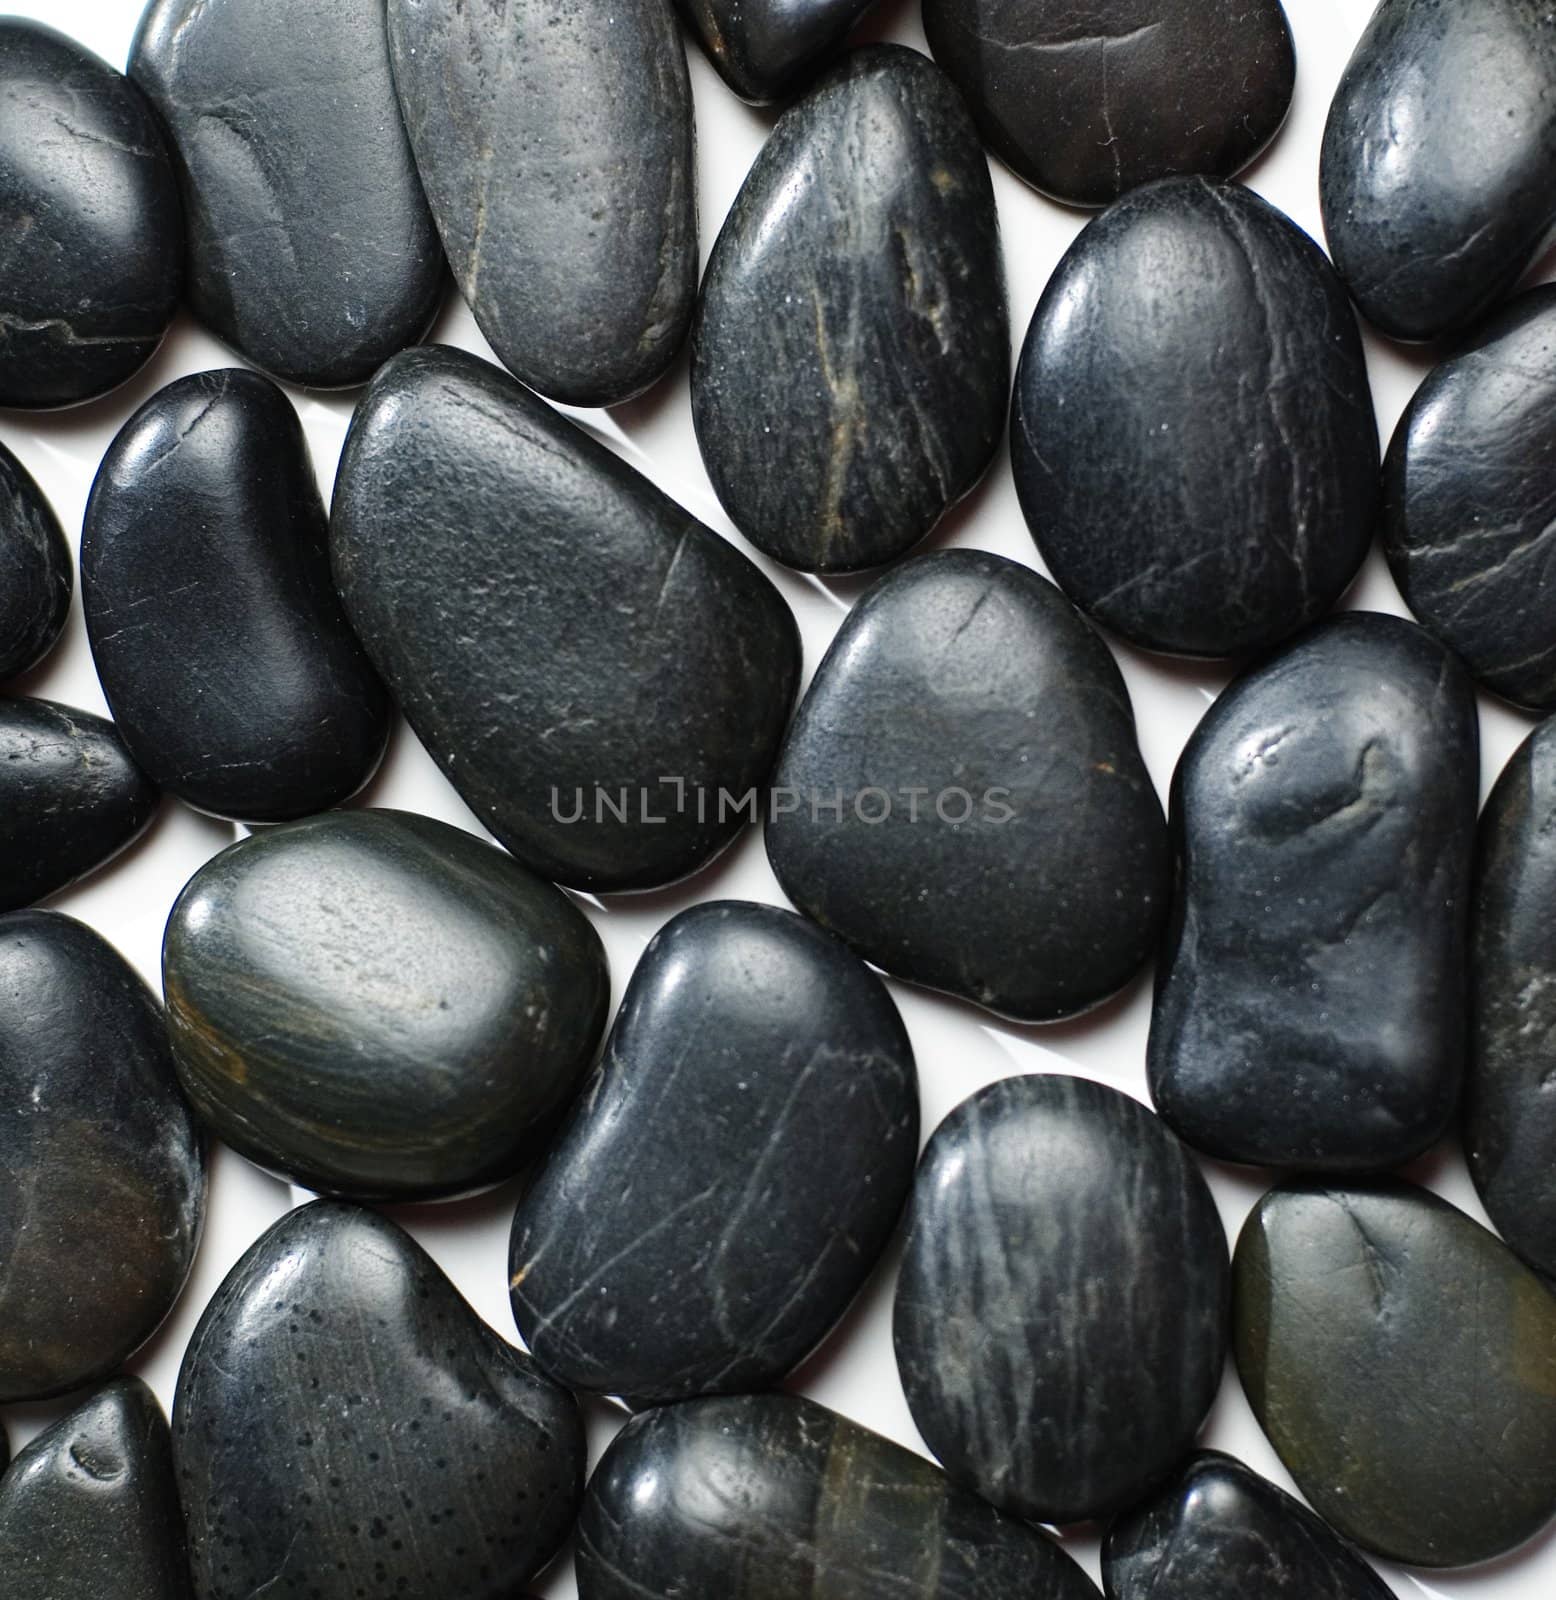 Group of black river rocks on display.